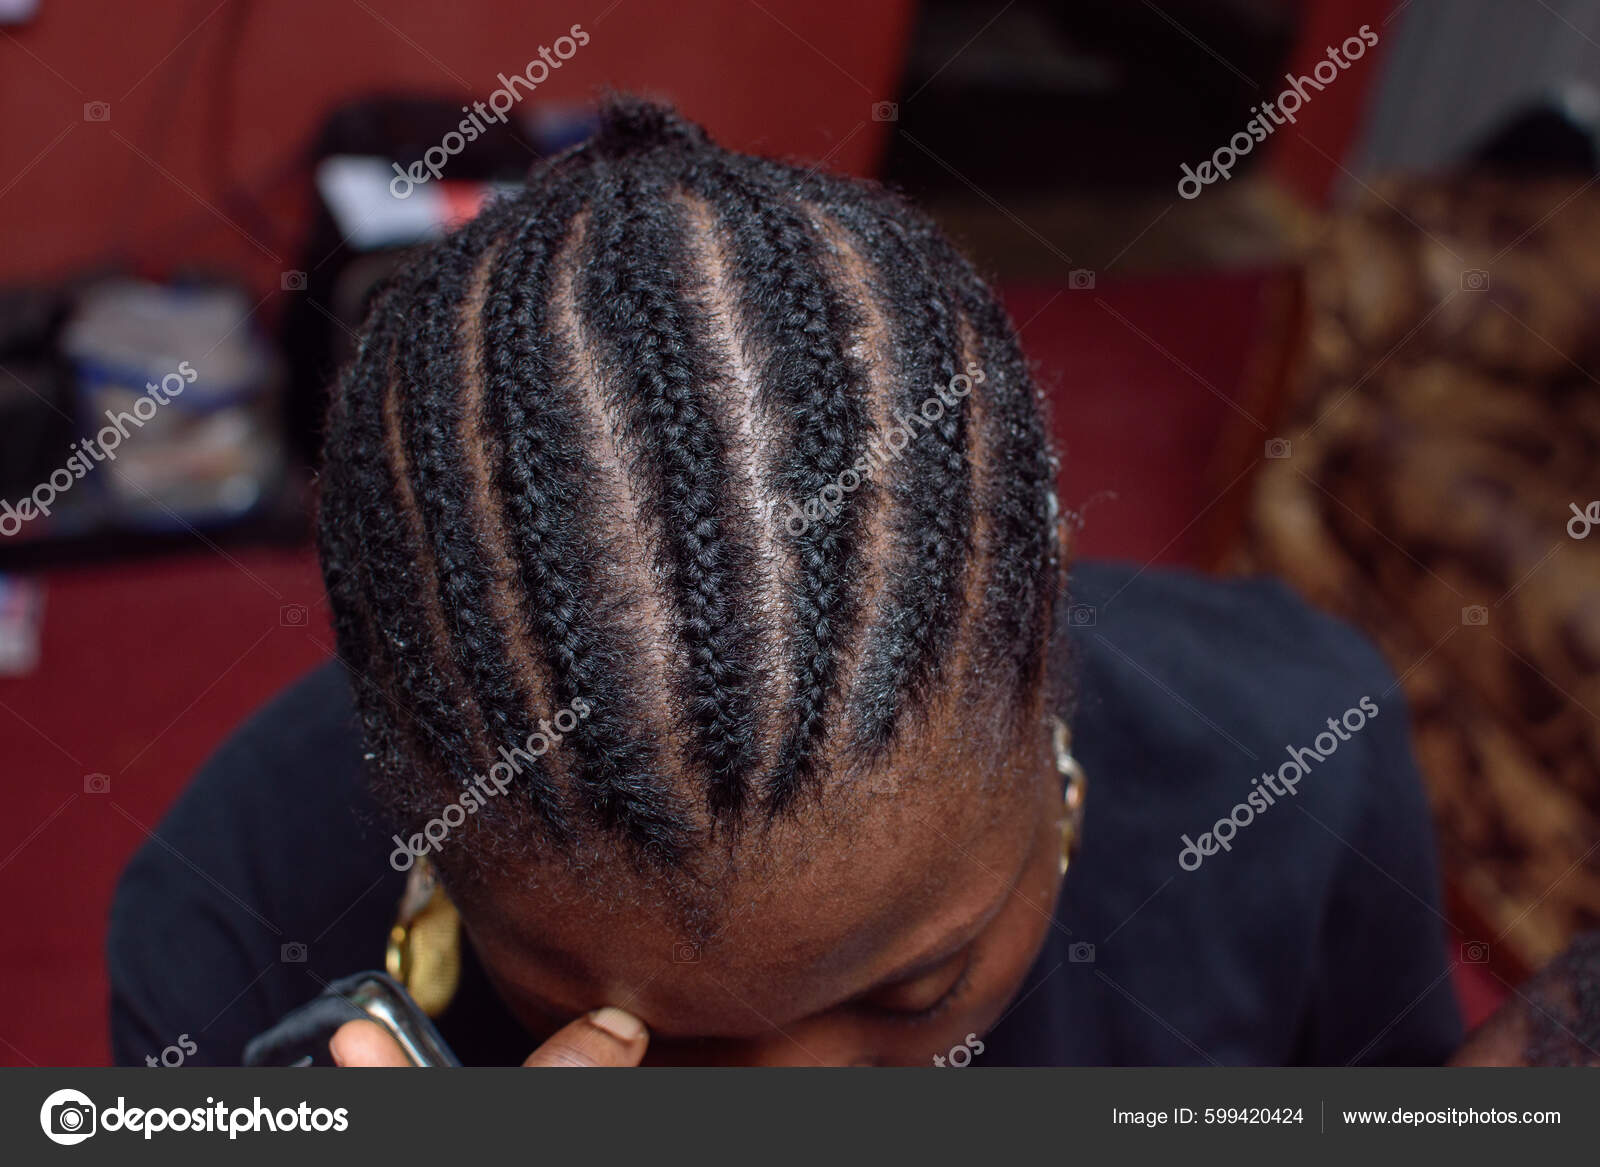 Nigerian hairstyles for ladies 